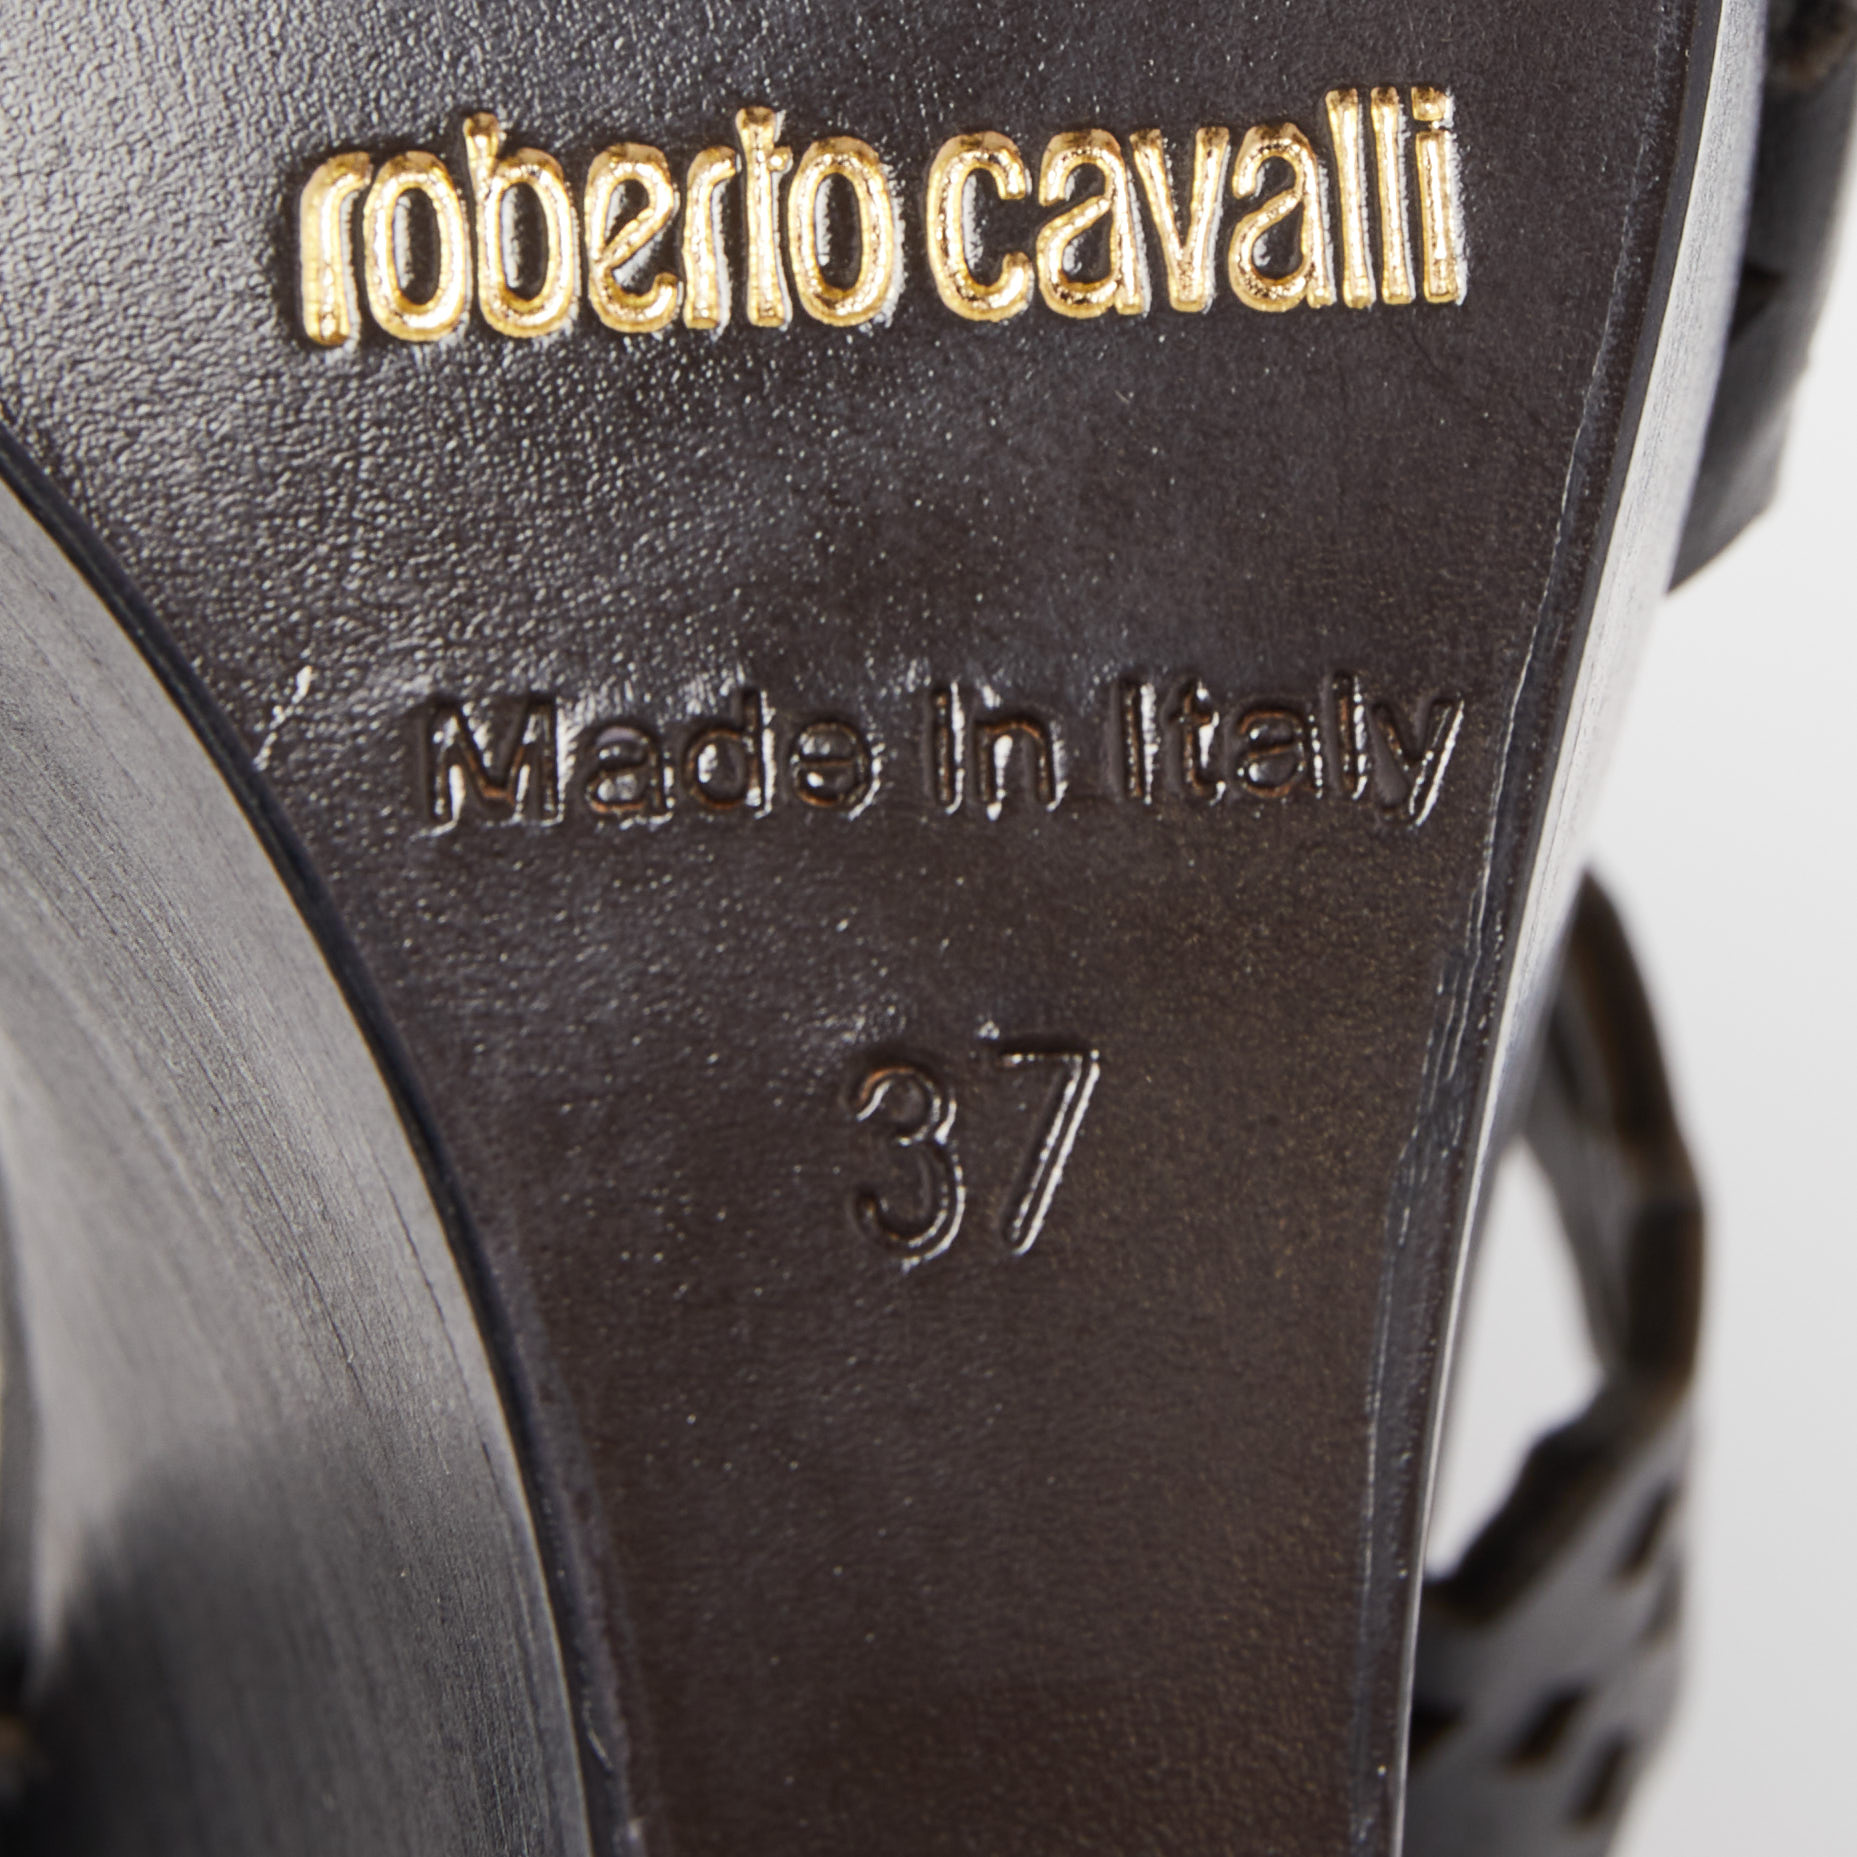 Roberto Cavalli Black Laser Cut Leather Ankle Strap Wedge Sandals Size 37